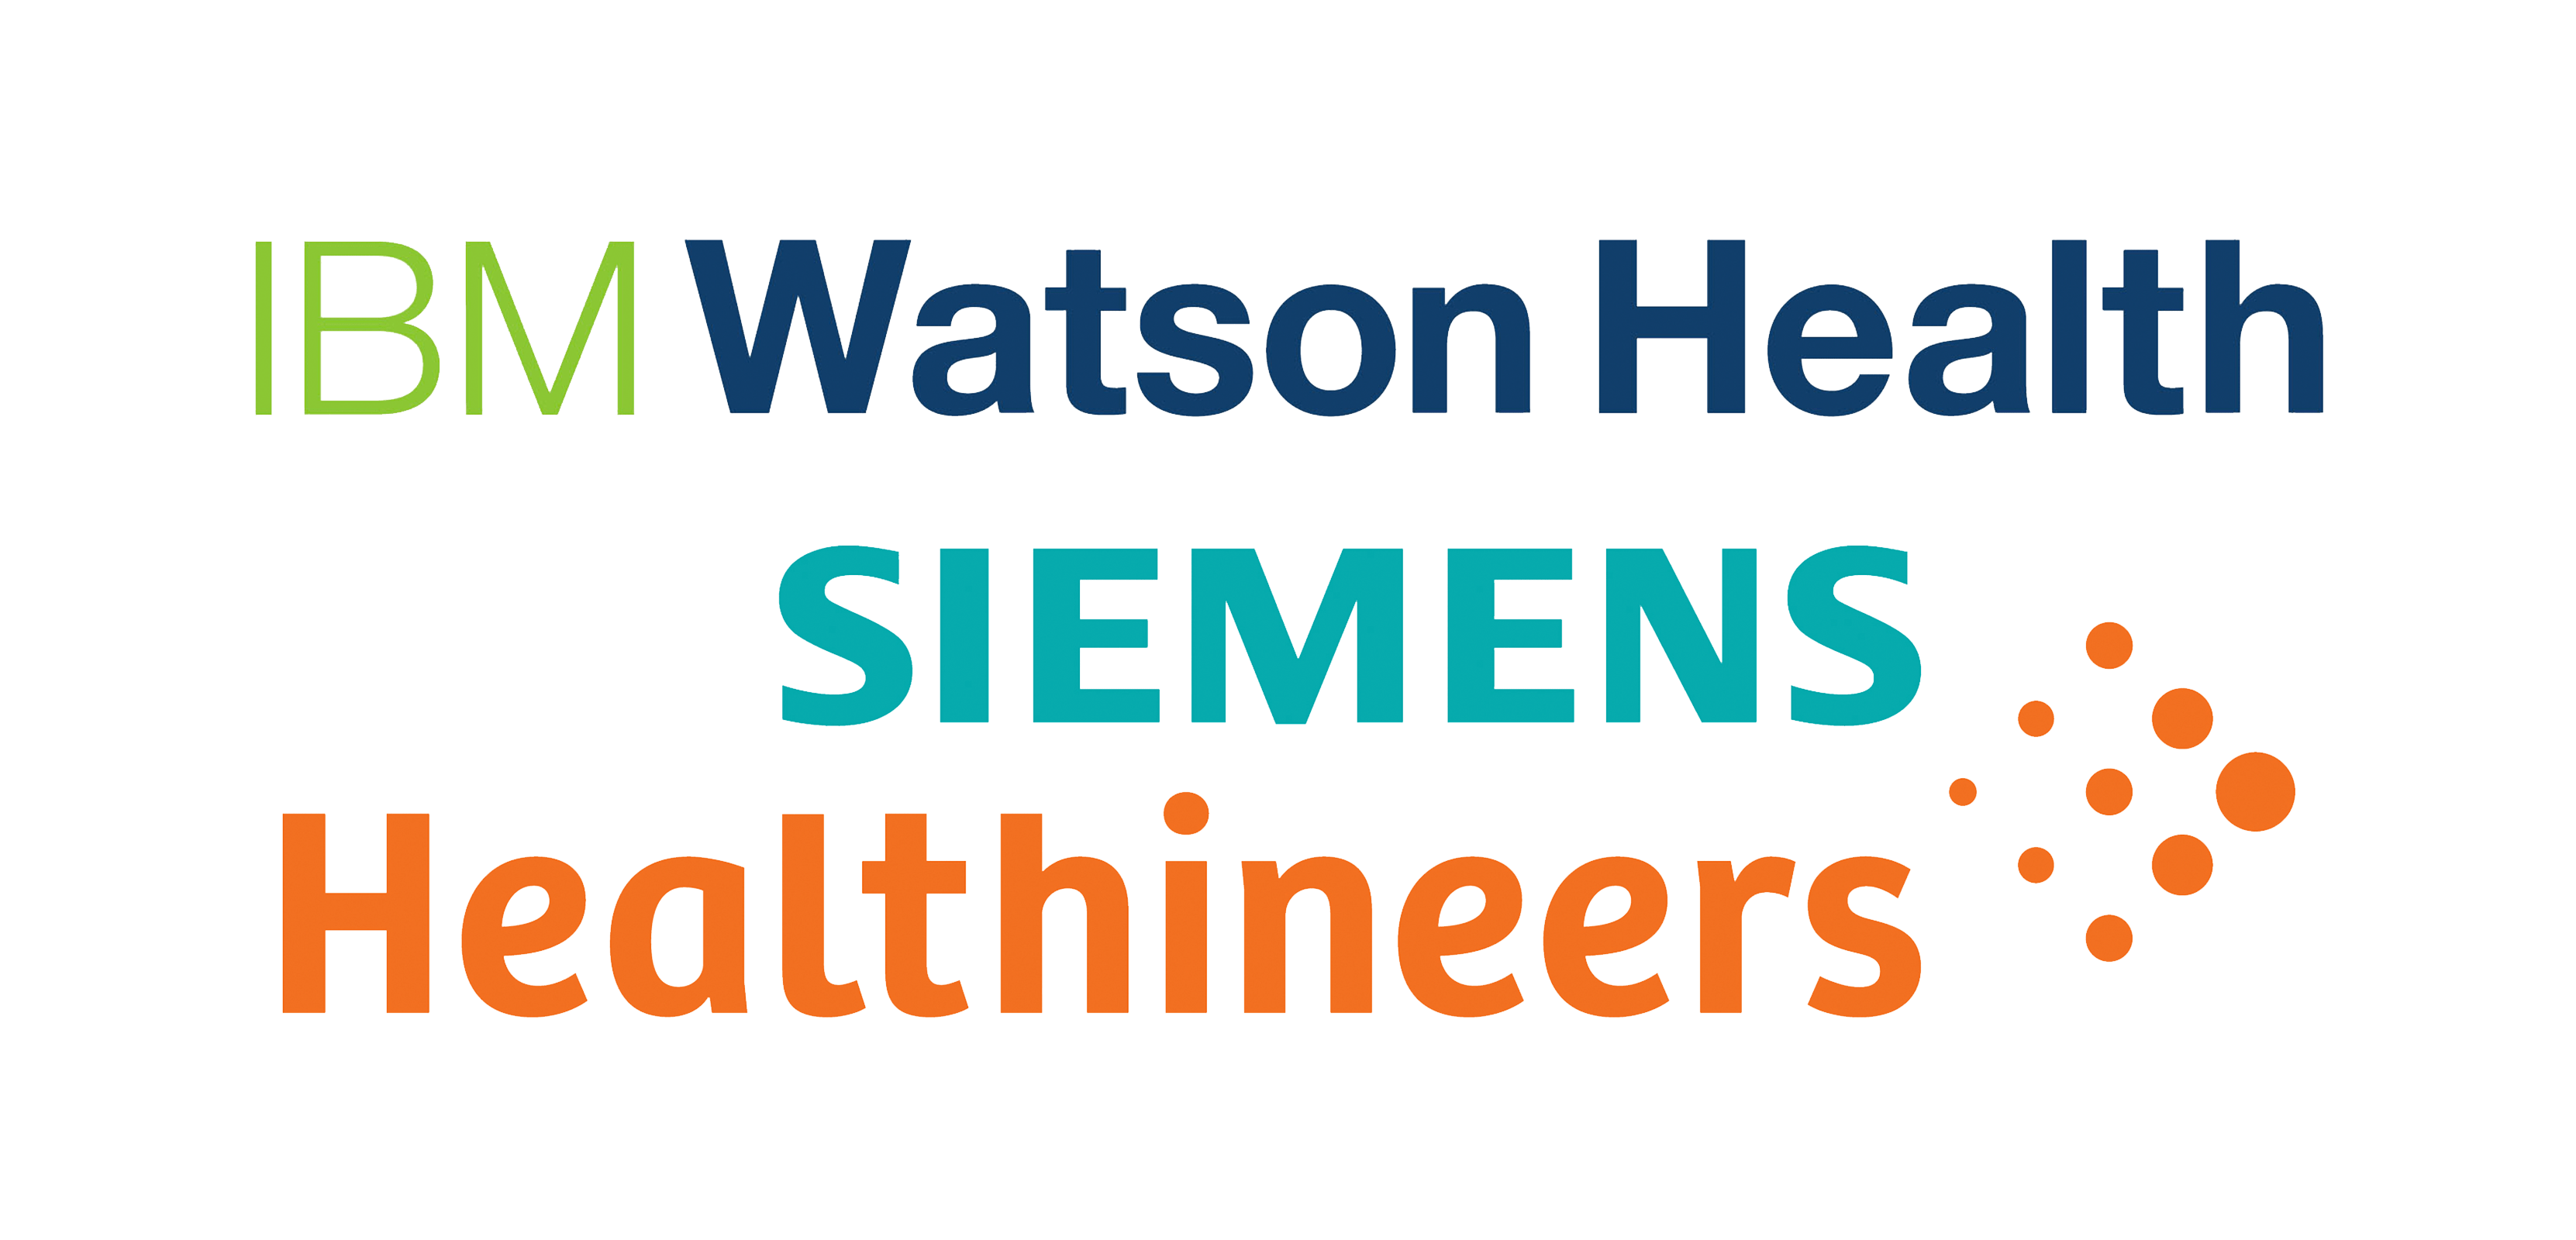 IBM Watson Health Logo - IBM News room Watson Health and Siemens Healthineers logo